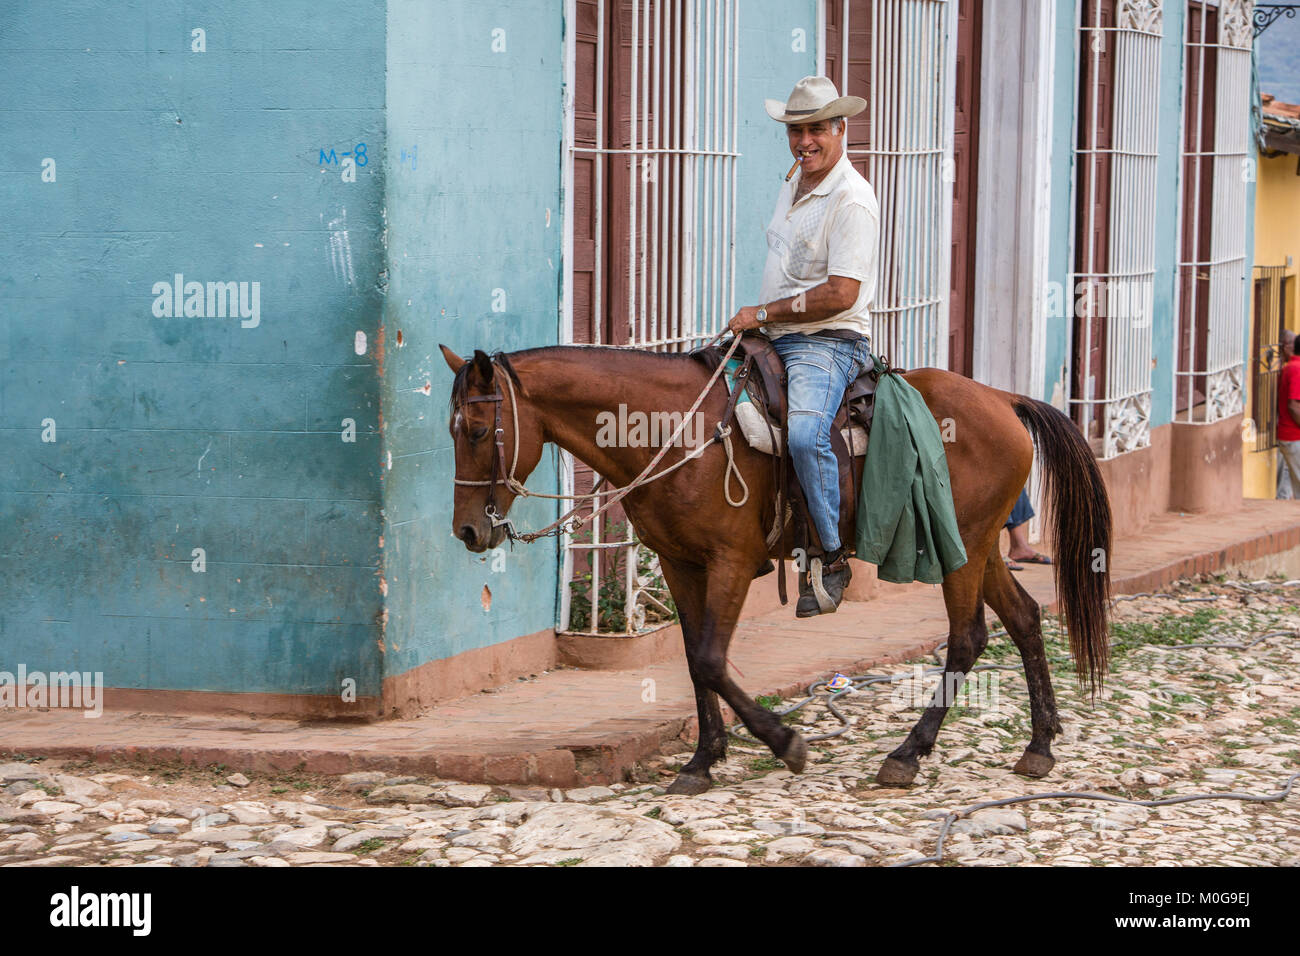 Cowboy on horseback in Trinidad, Cuba Stock Photo